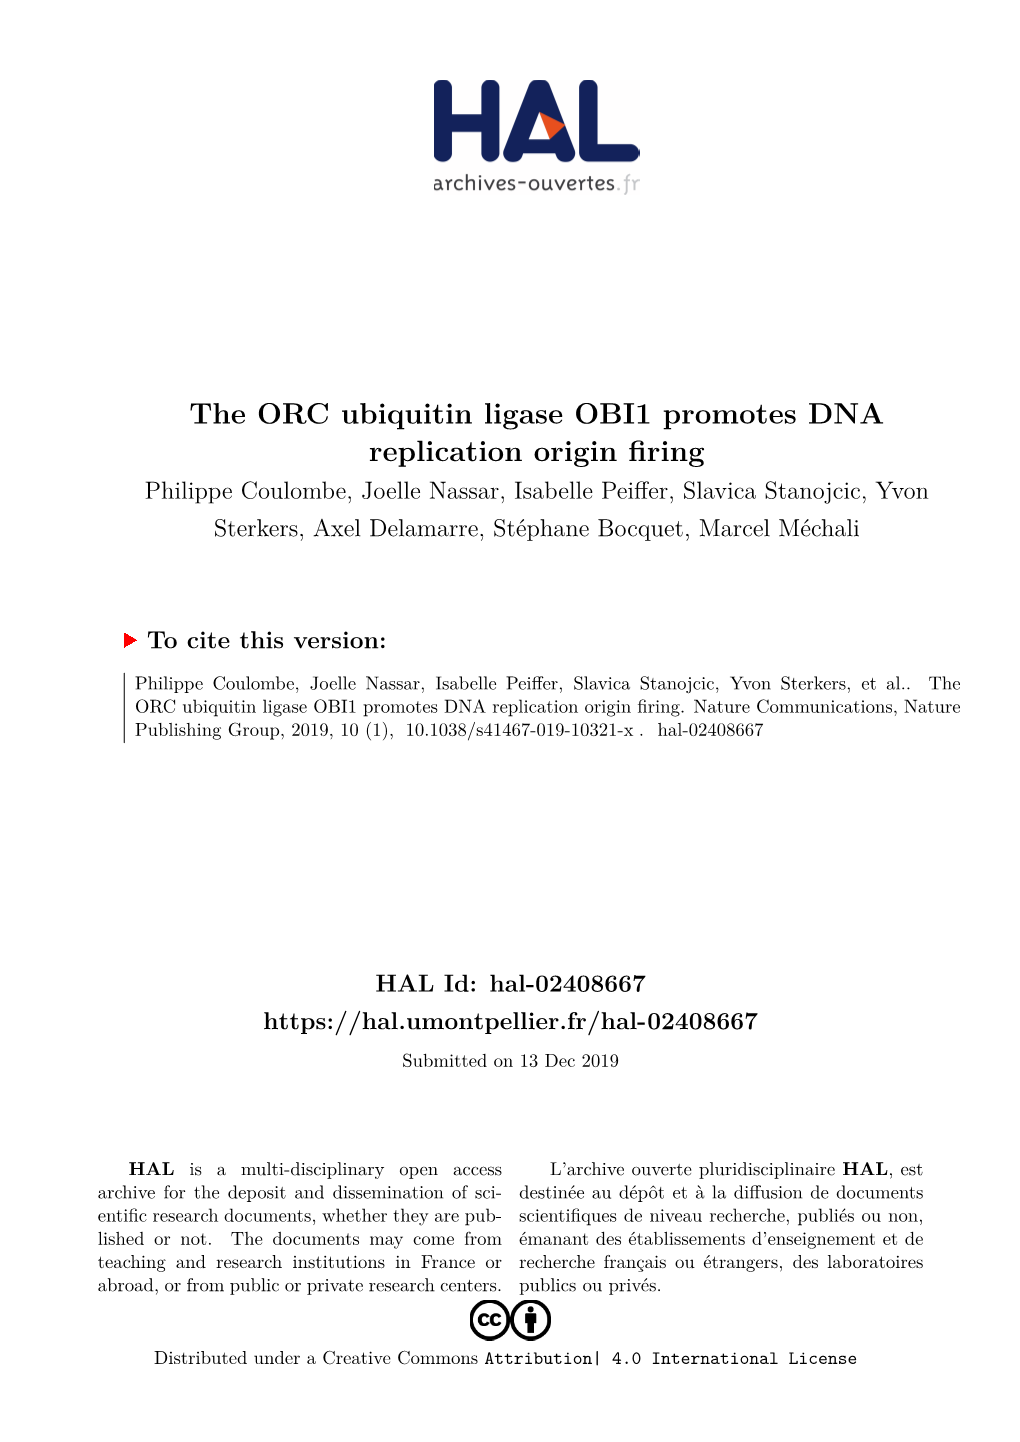 The ORC Ubiquitin Ligase OBI1 Promotes DNA Replication Origin Firing